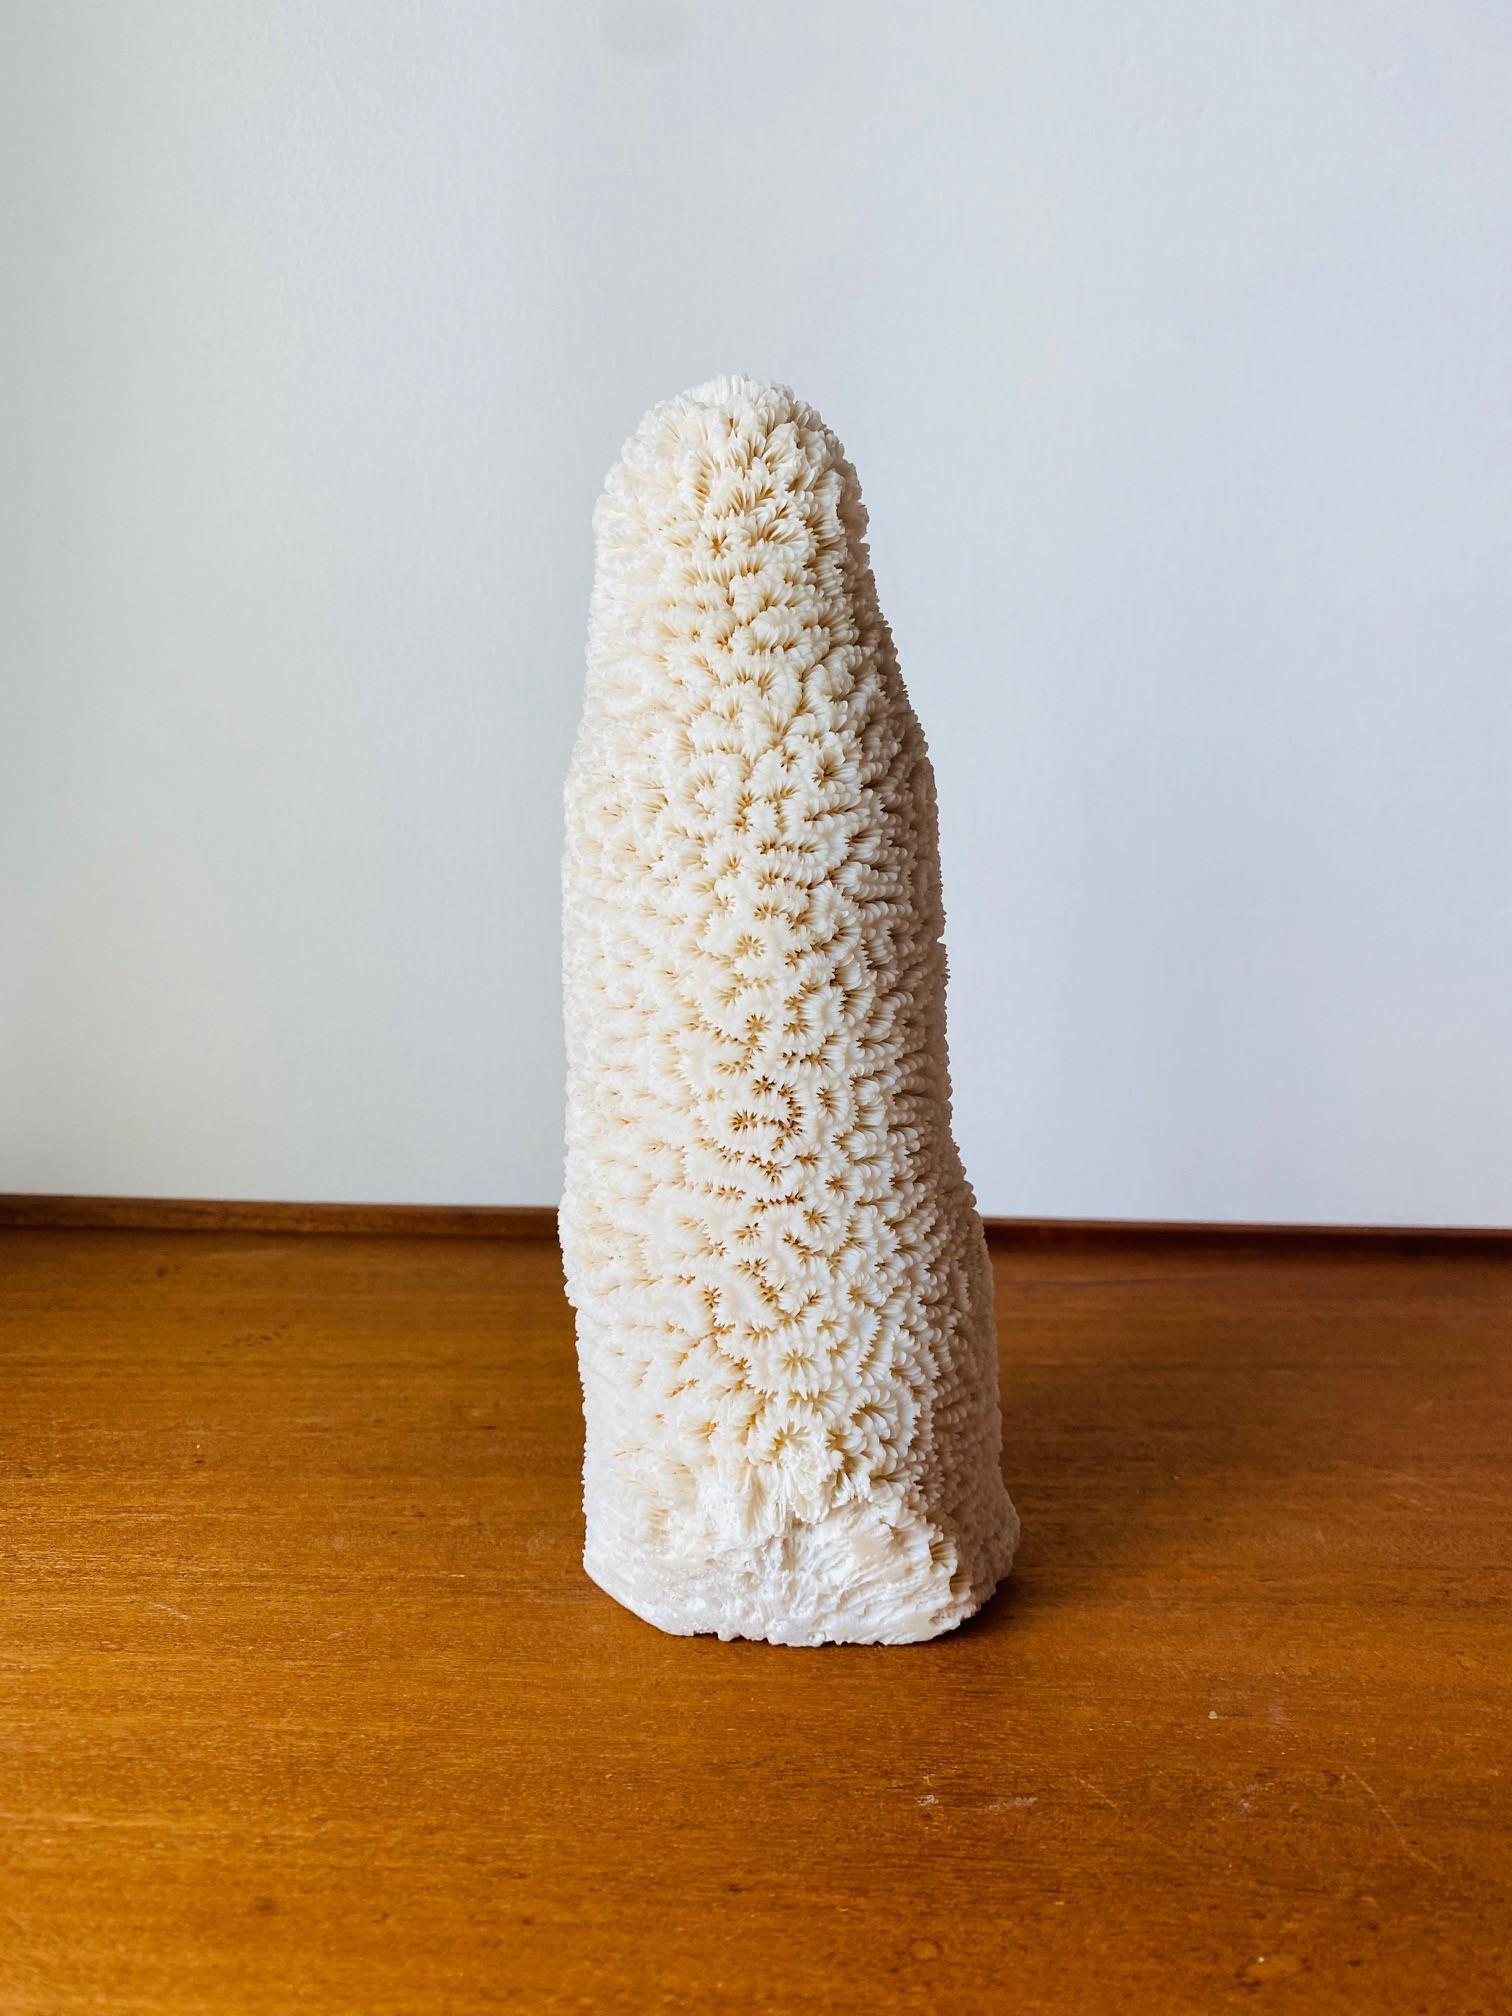 American Sculptural Natural White Sea Coral Specimen For Sale